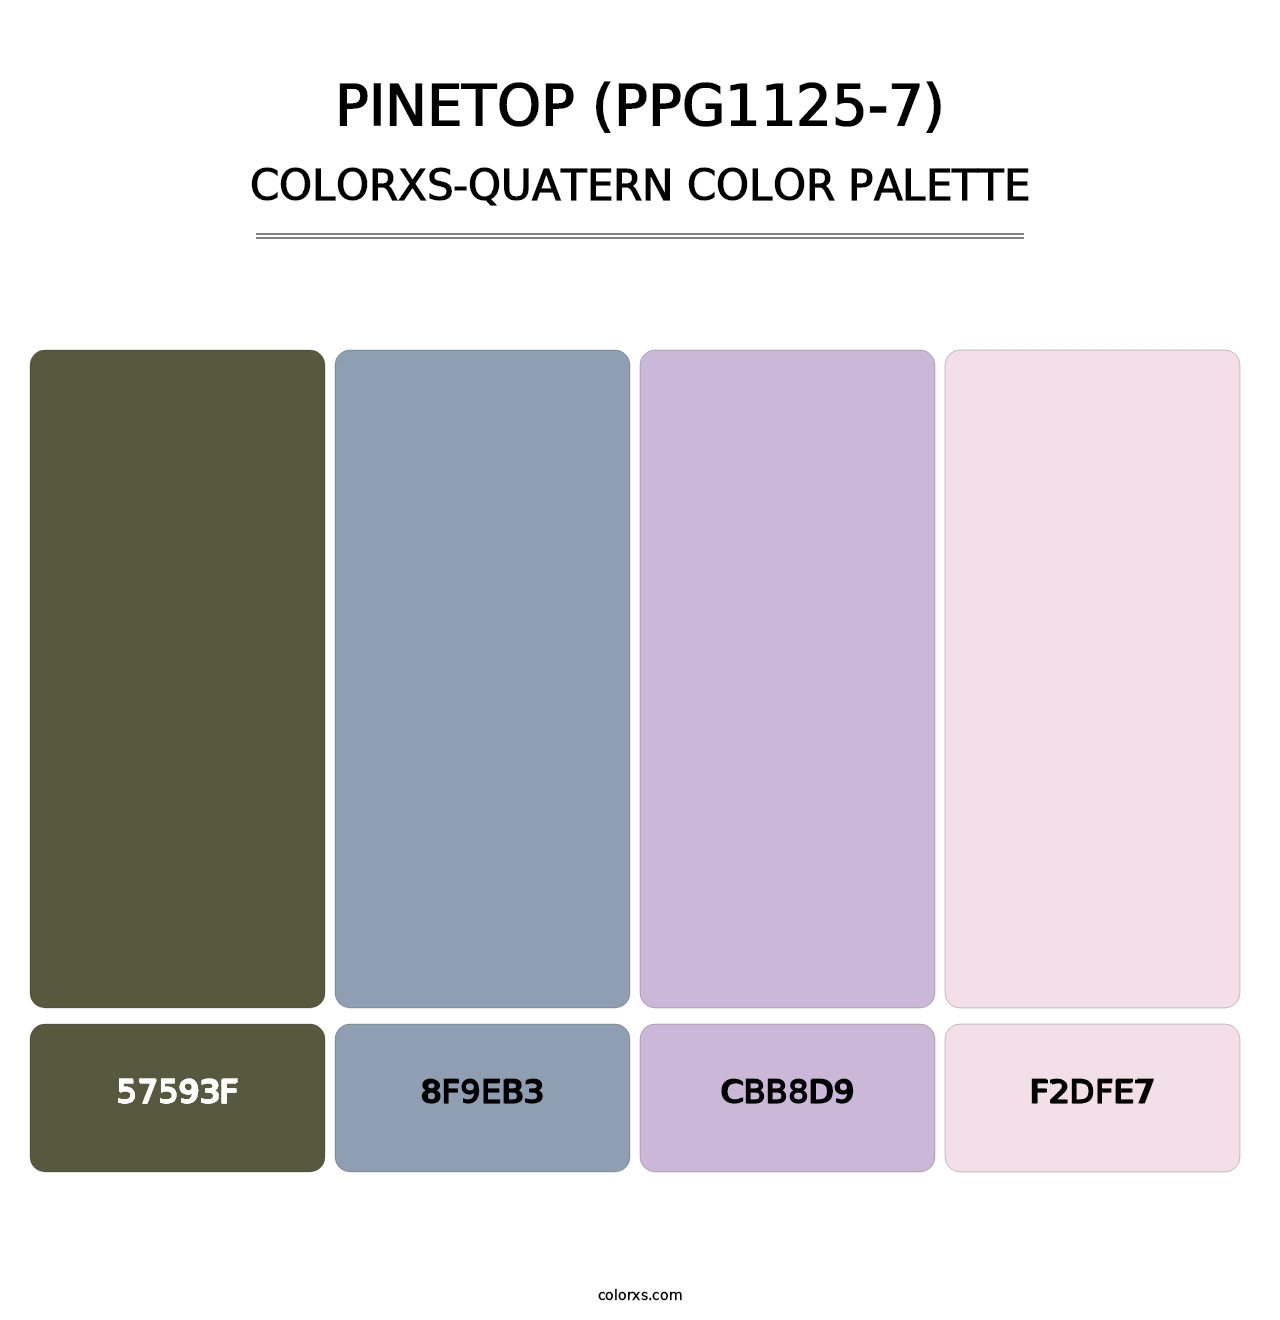 Pinetop (PPG1125-7) - Colorxs Quatern Palette